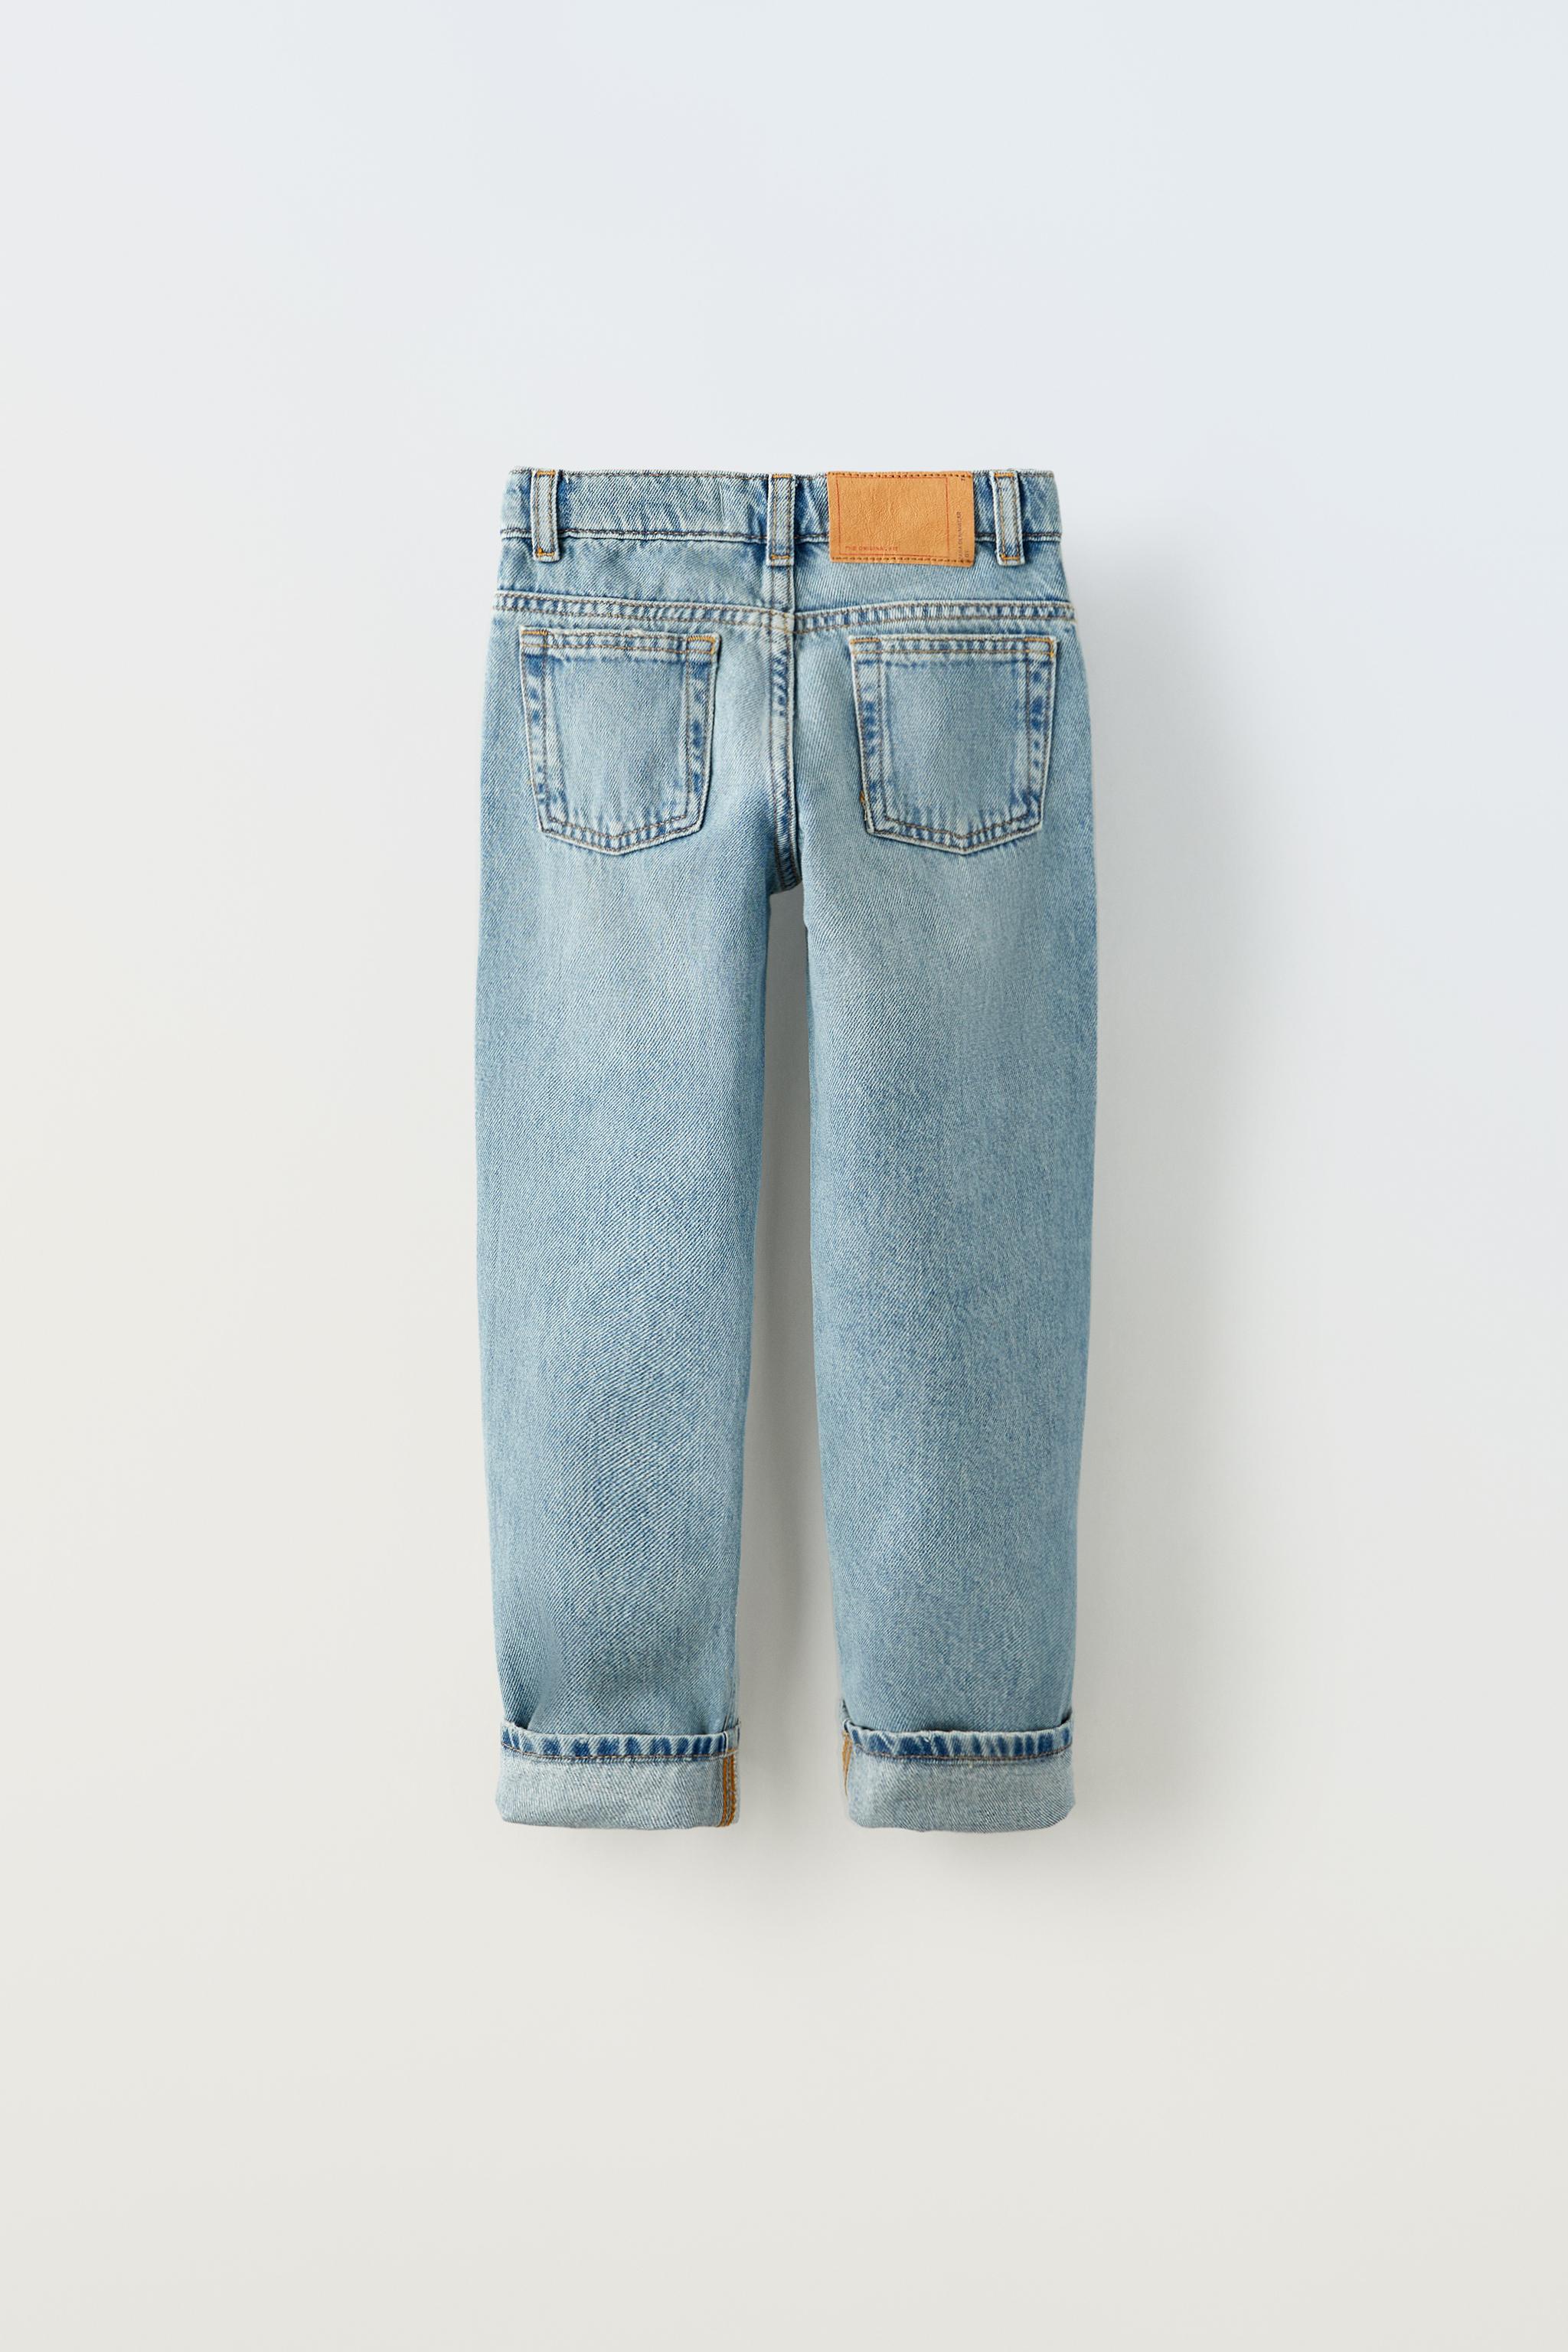 Zara Men Basic slim fit jeans 5575/385/800 (38 EU): Buy Online at